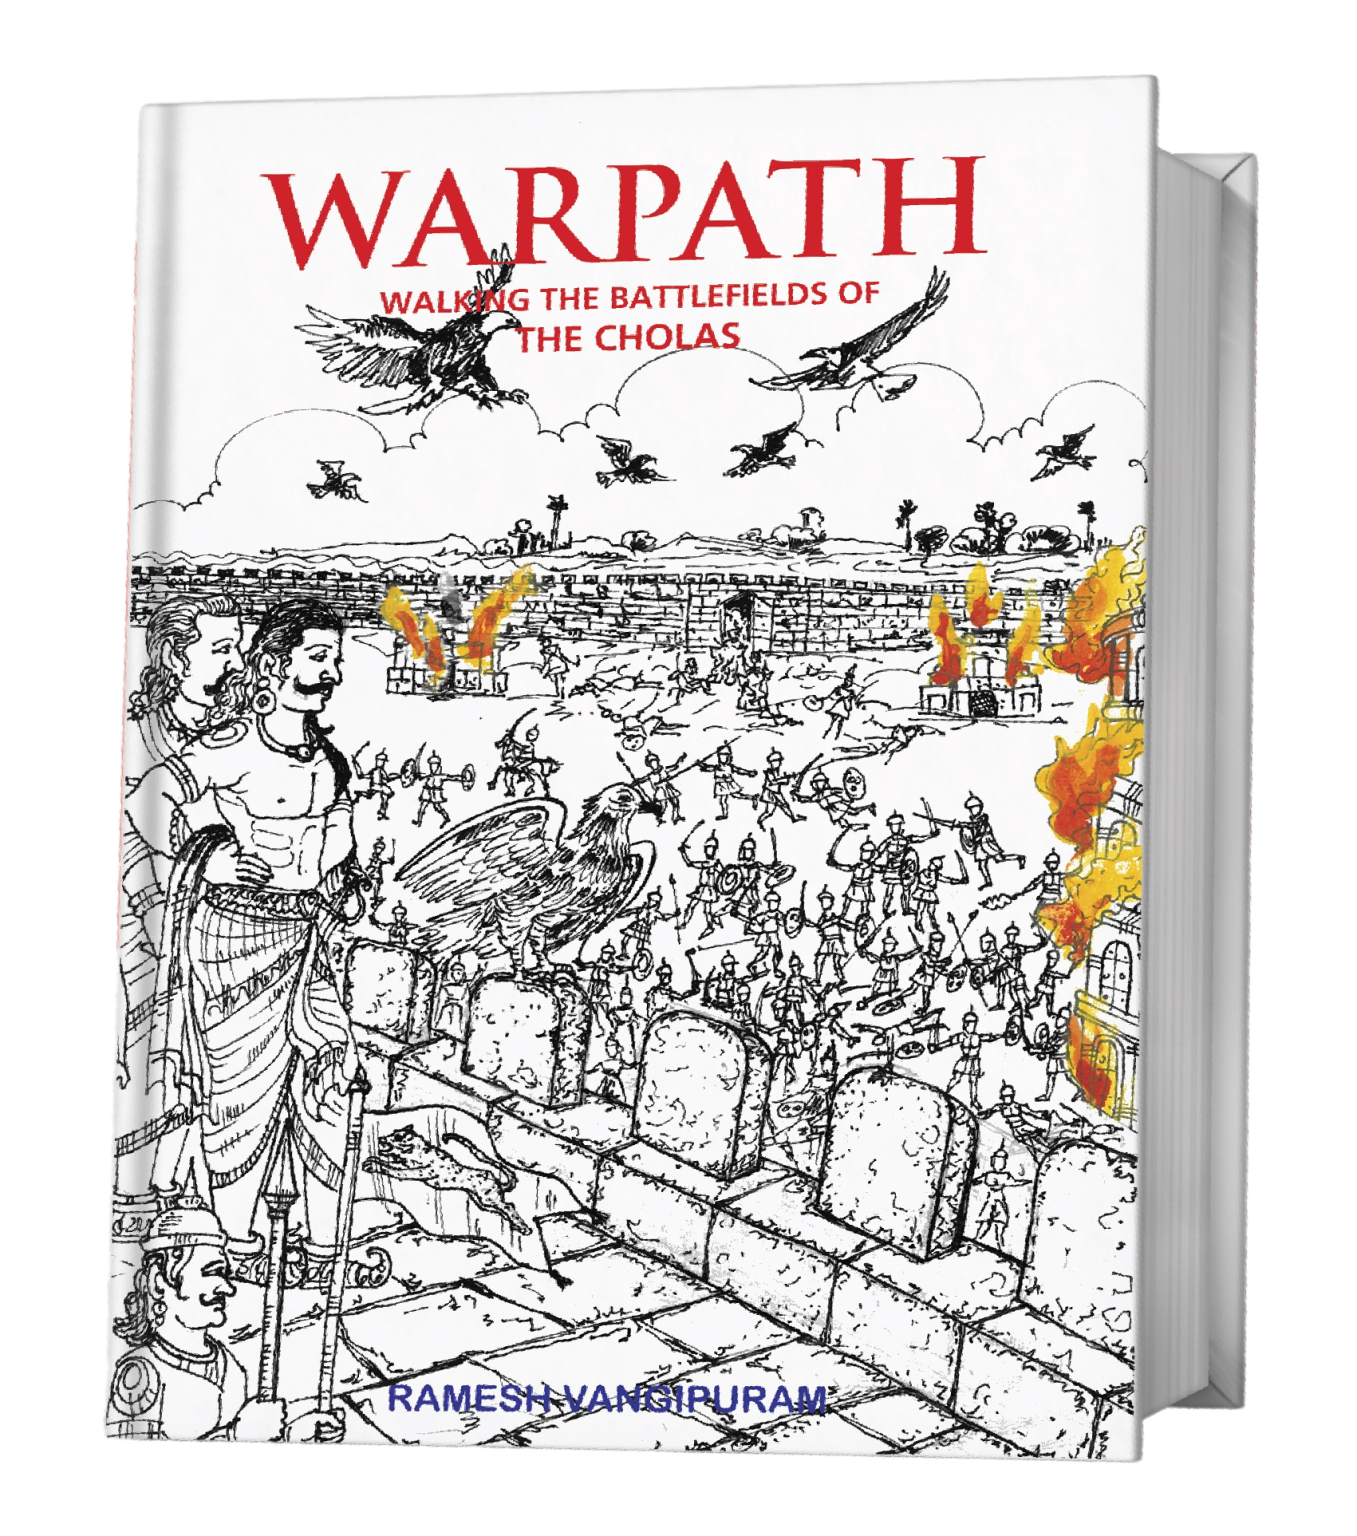 Warpath – HERITAGE INSPIRED TOURS